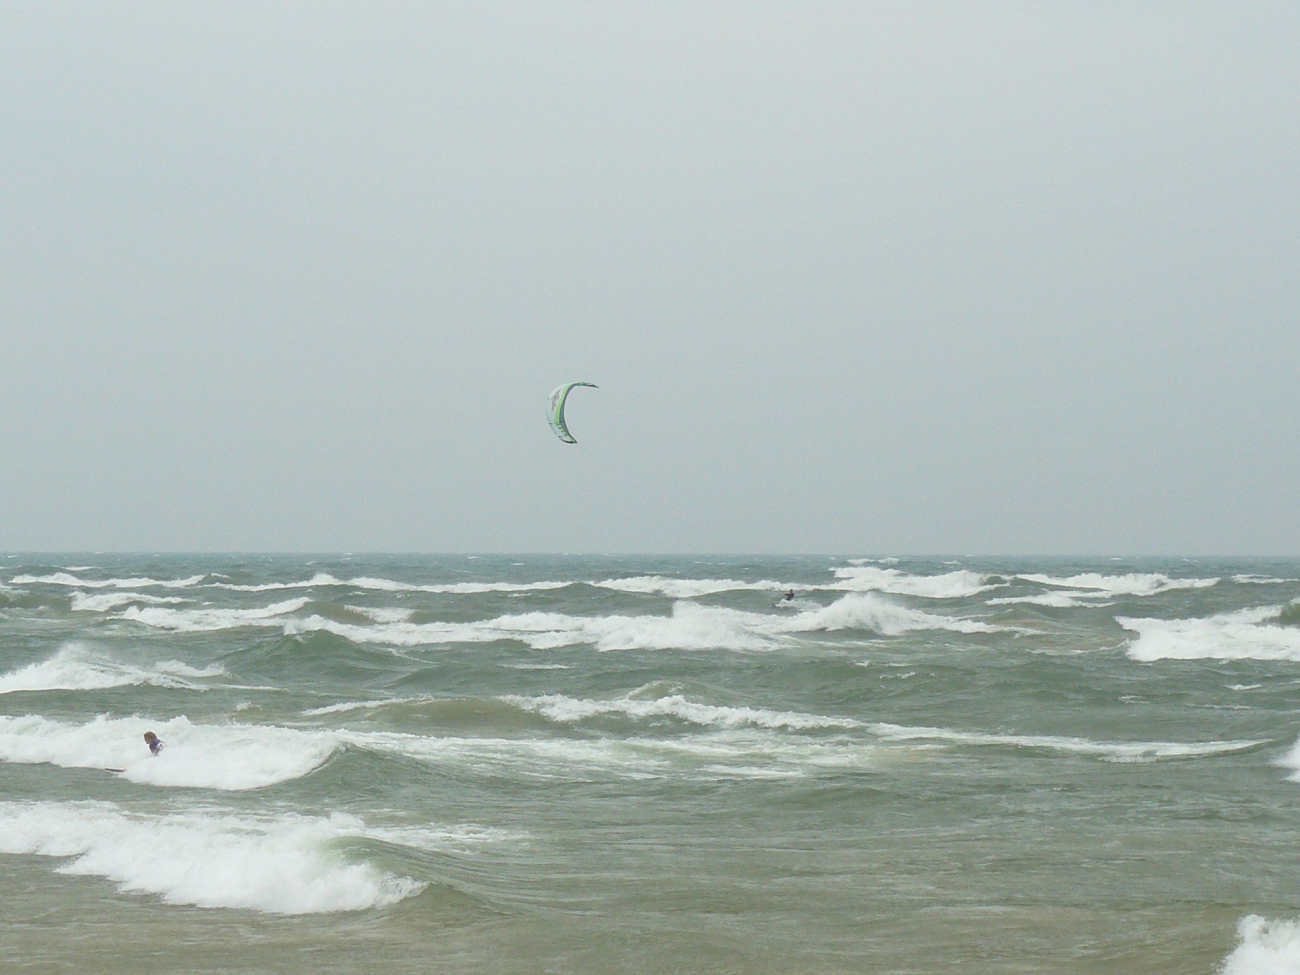 Wind surfing on Lake Michigan